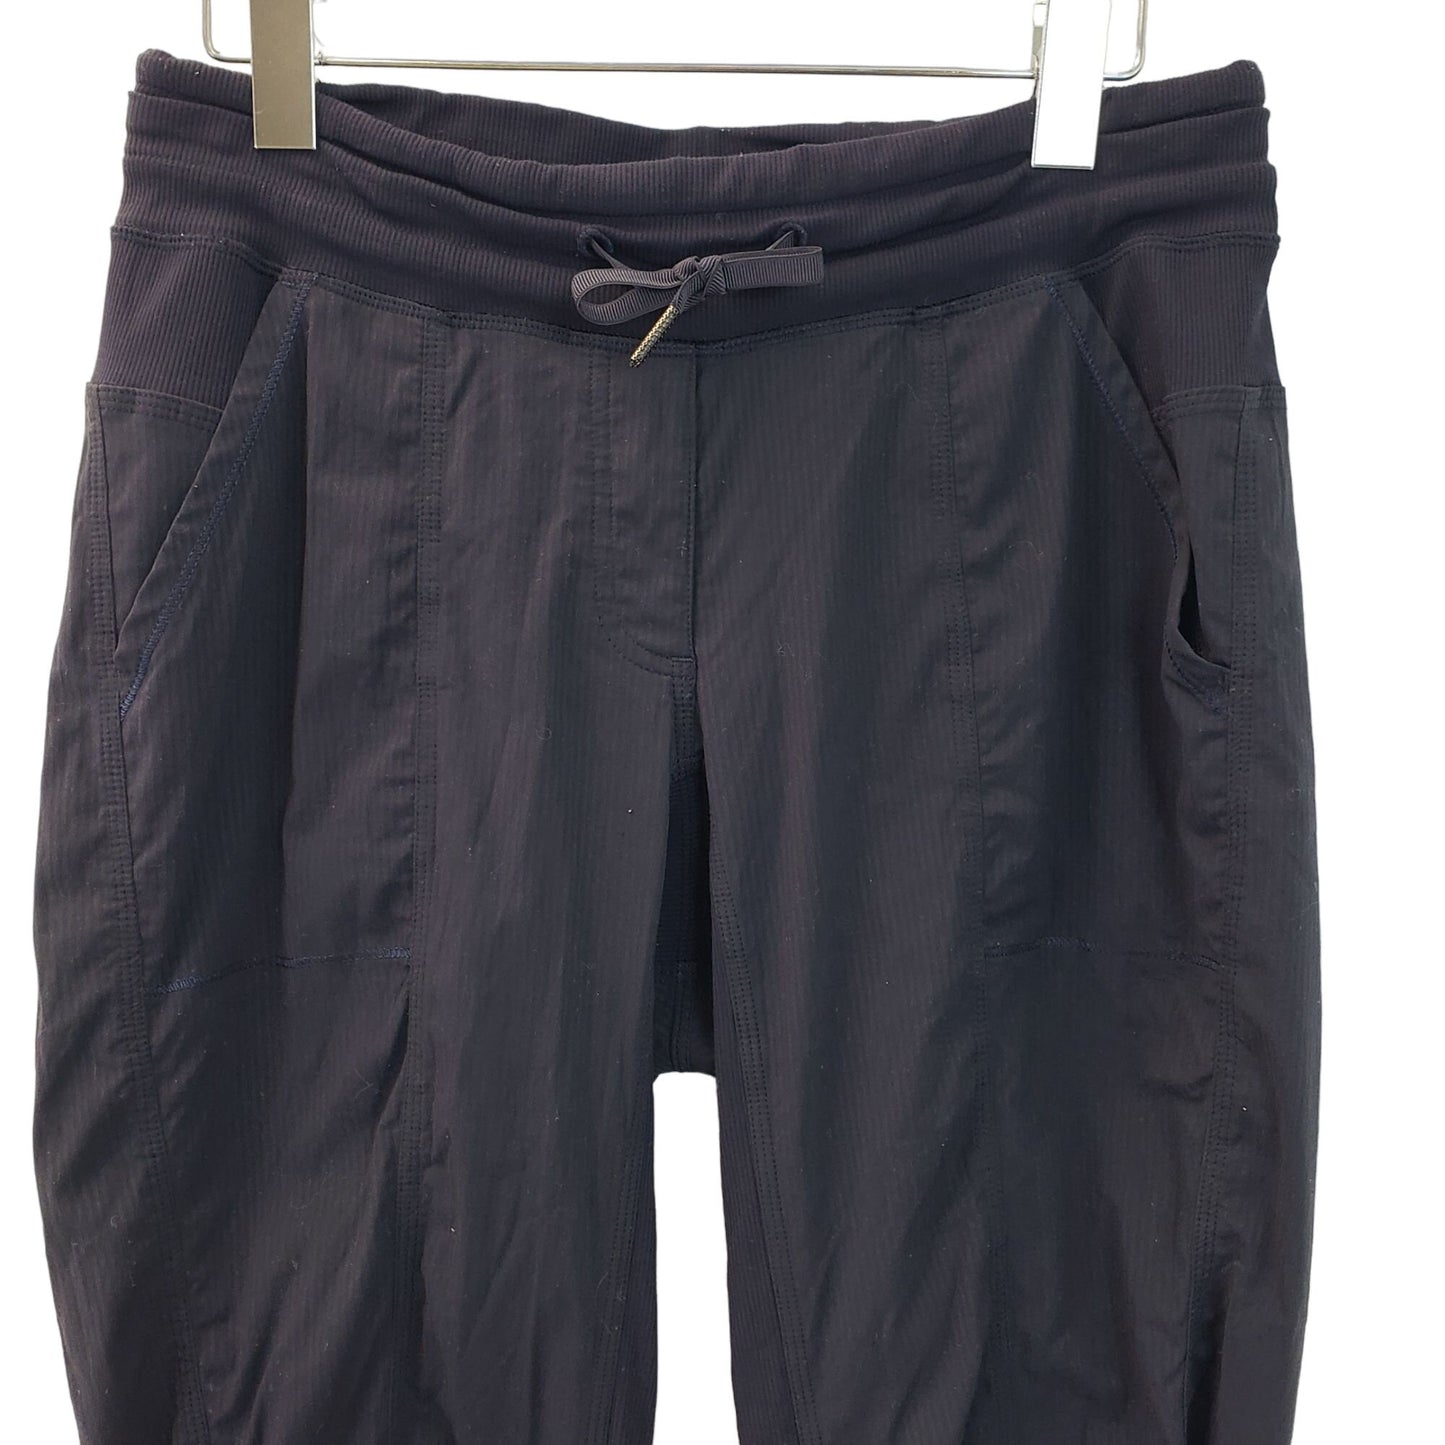 Lululemon Black Micro Striped Track Pants with Pockets Size 6